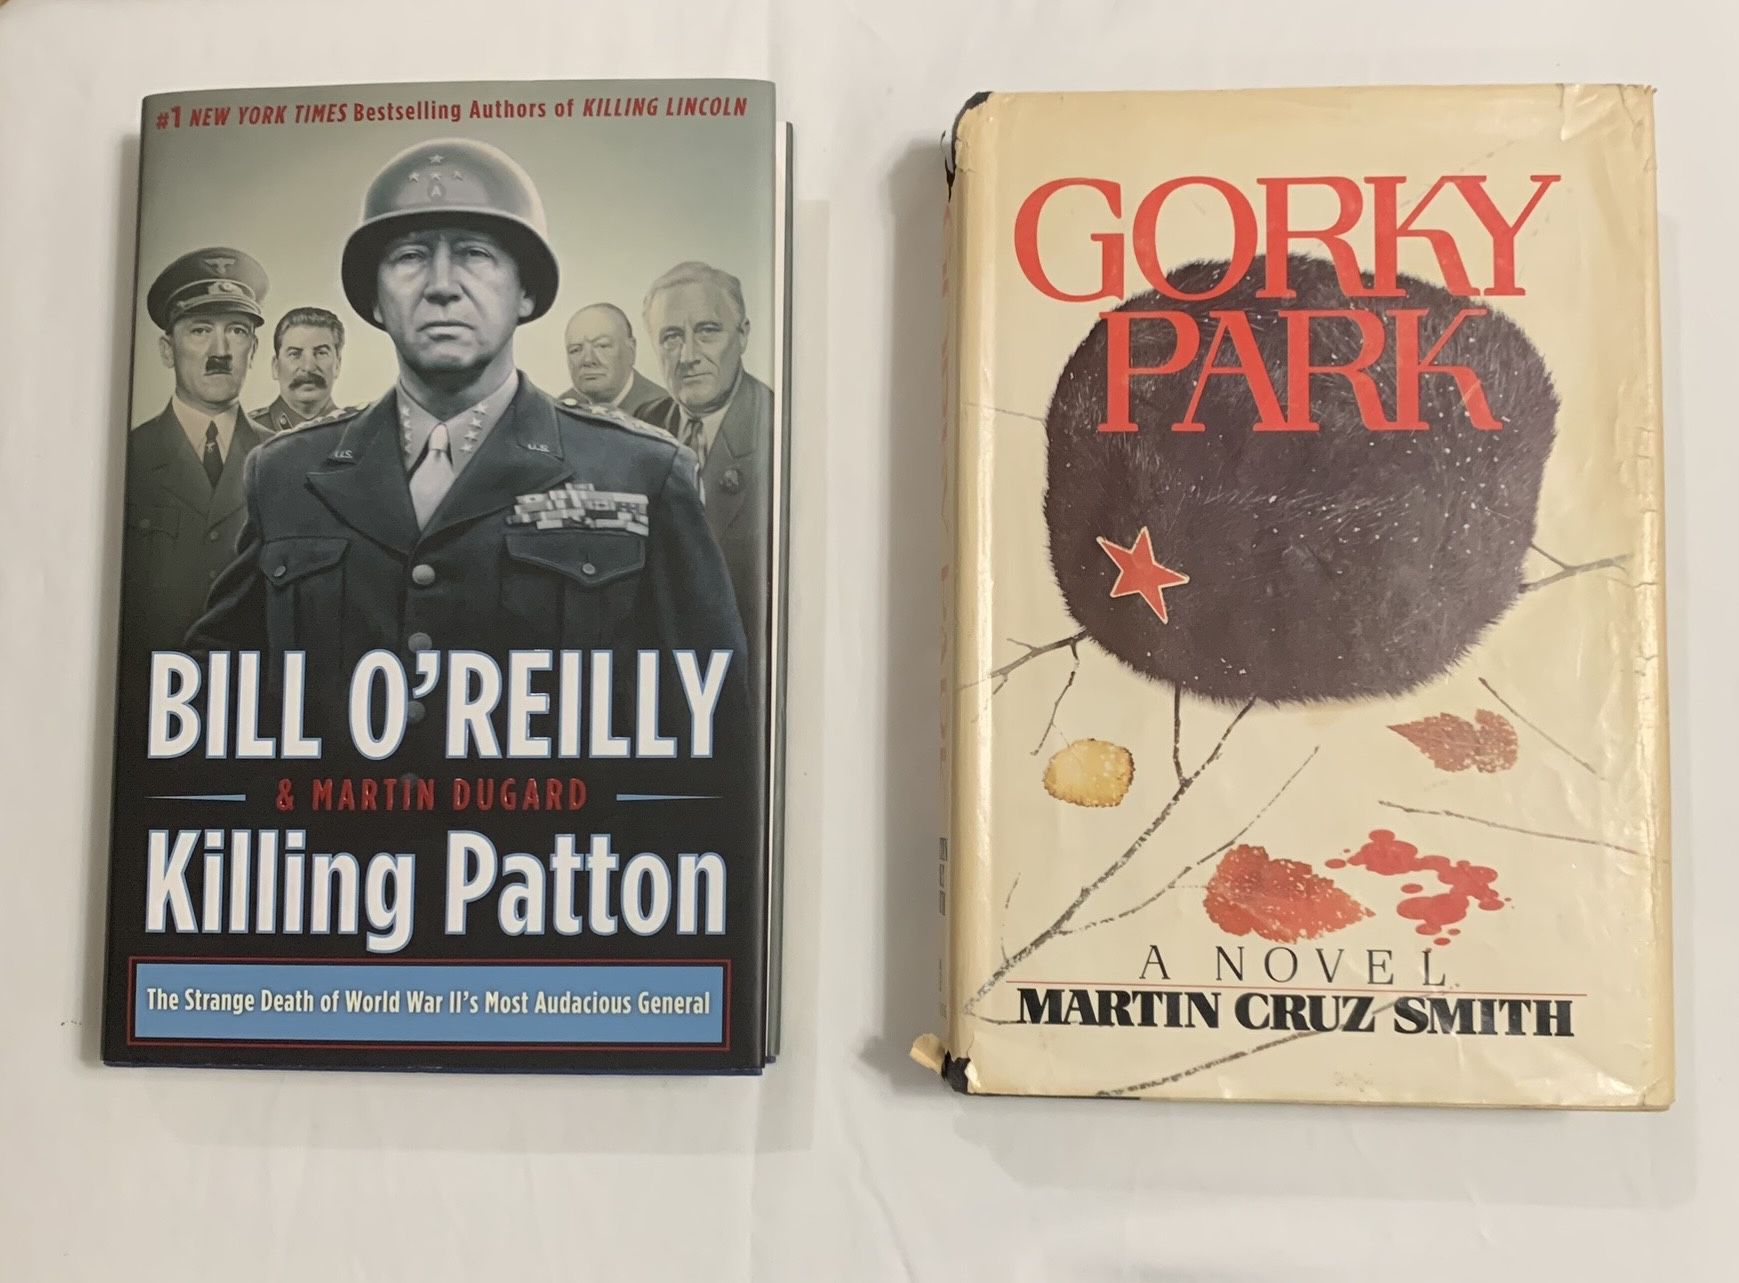 Killing Patton by Bill O’Reilly/Martin Dugard + Gorky Park by Martin C. Smith (2) Books Total